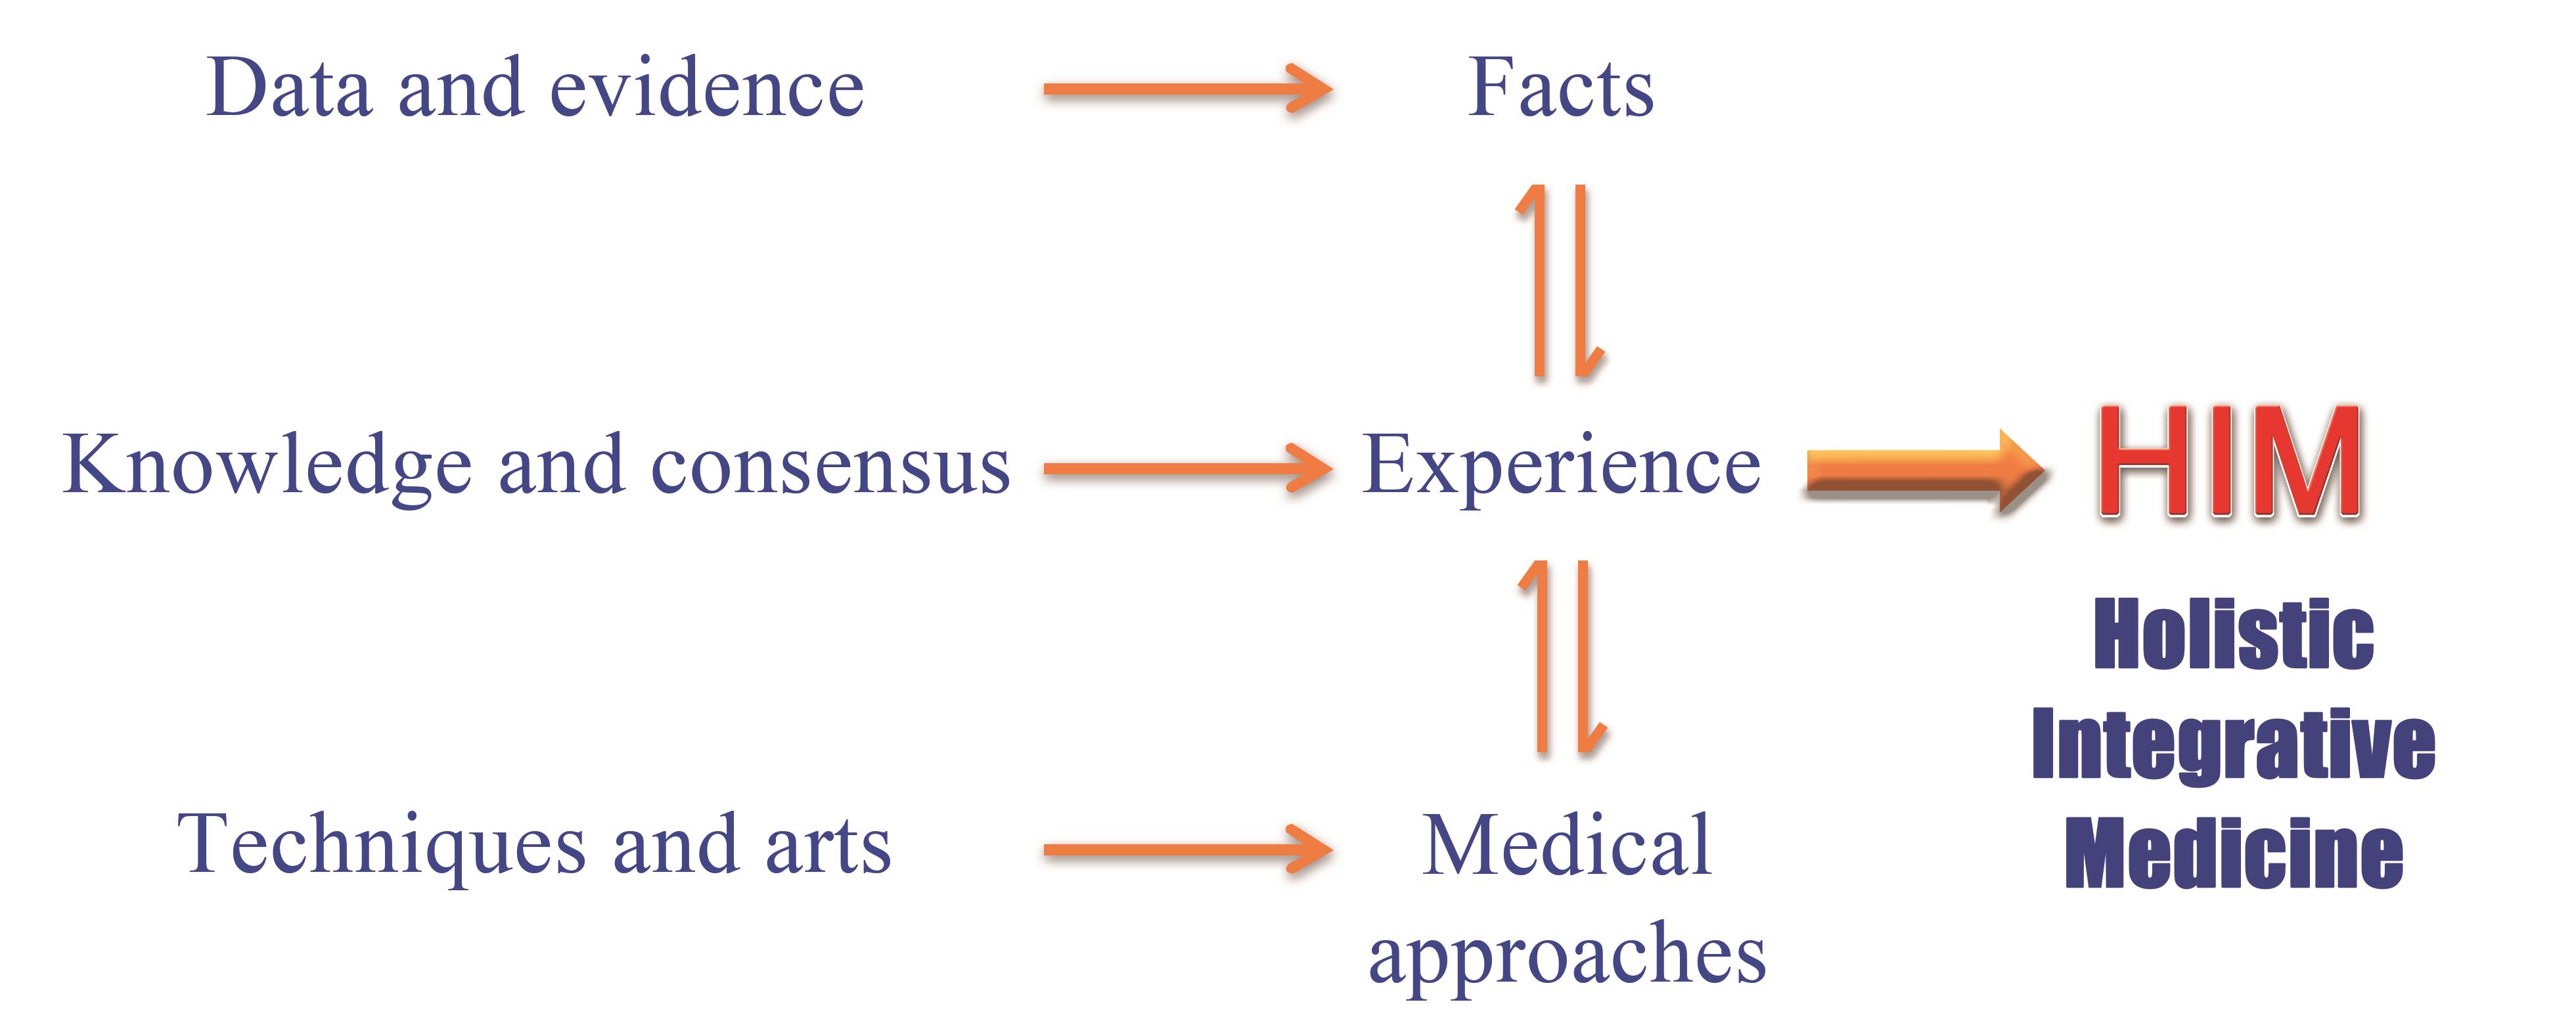 The connotation and evolvement of holistic integrative medicine (HIM).